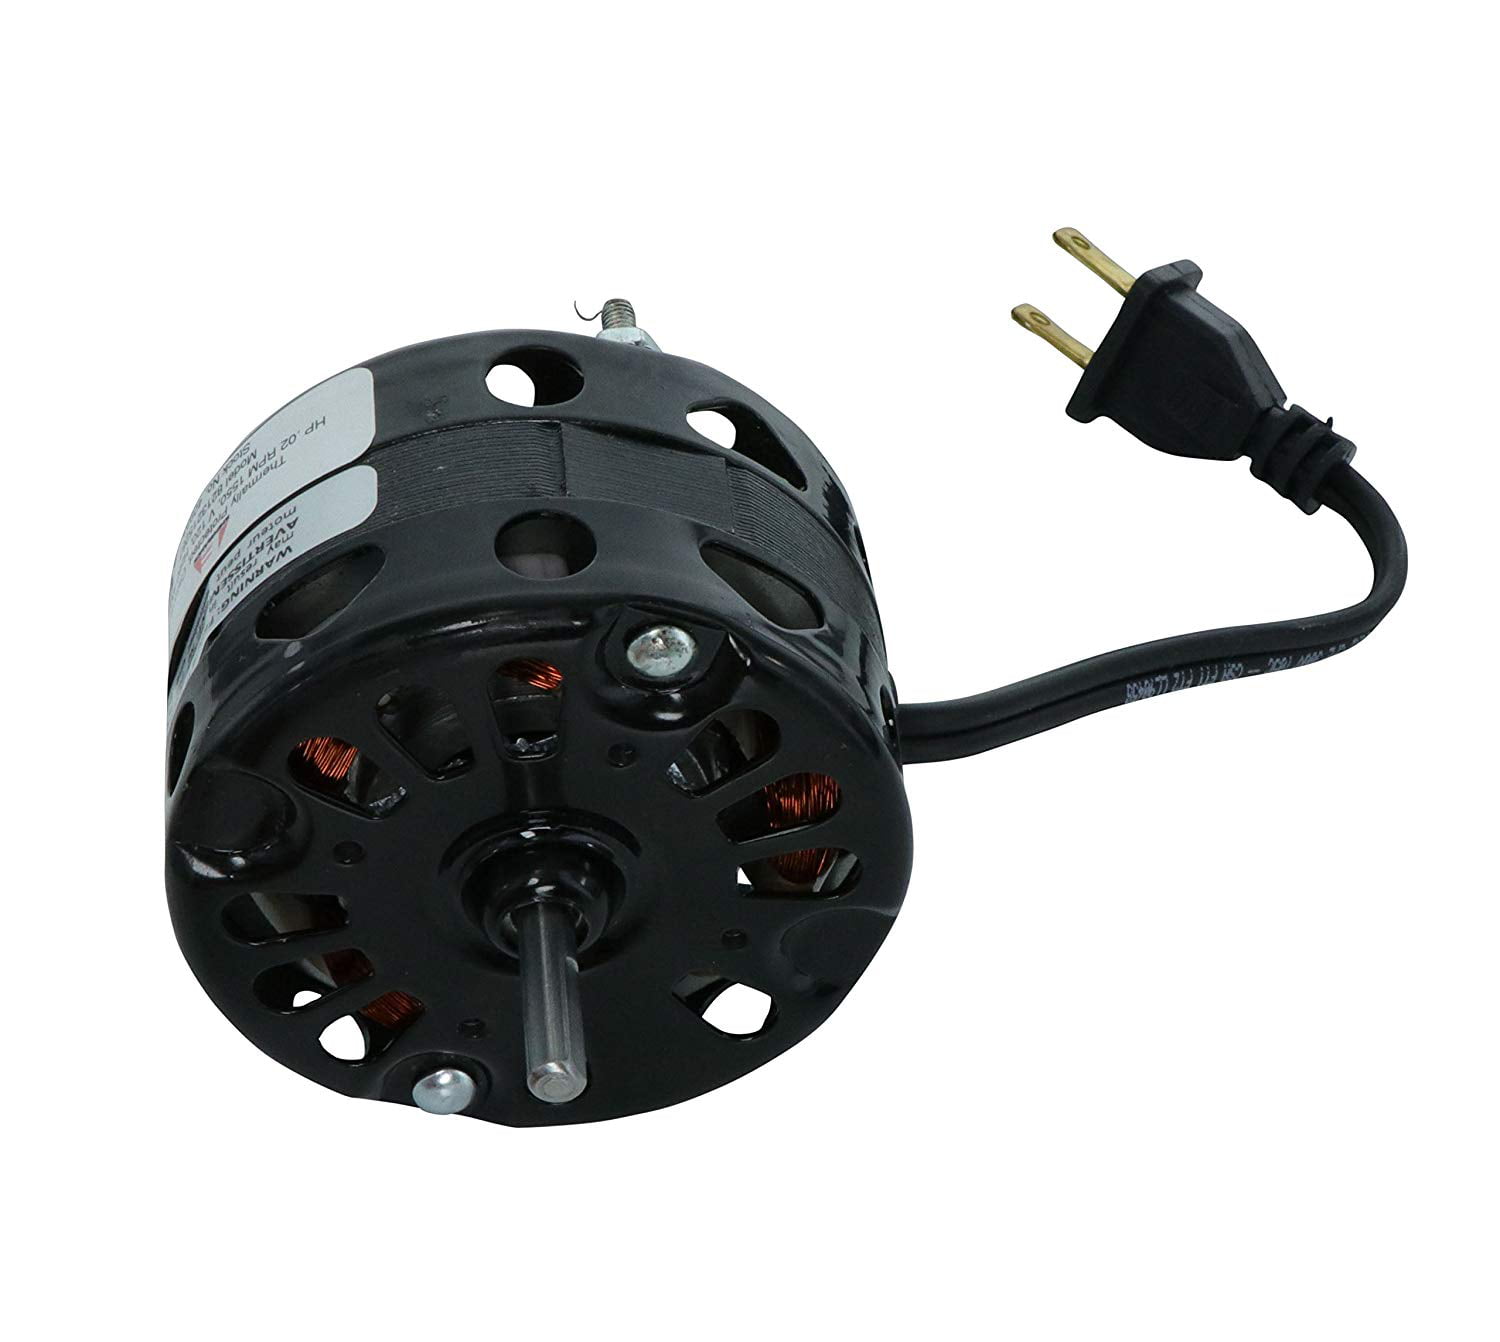 3.3 Inch Diameter Vent Fan Motor Replacement For Nutone/Broan JA2B097N 89615 PACKARD Endurance Pro 6080-032